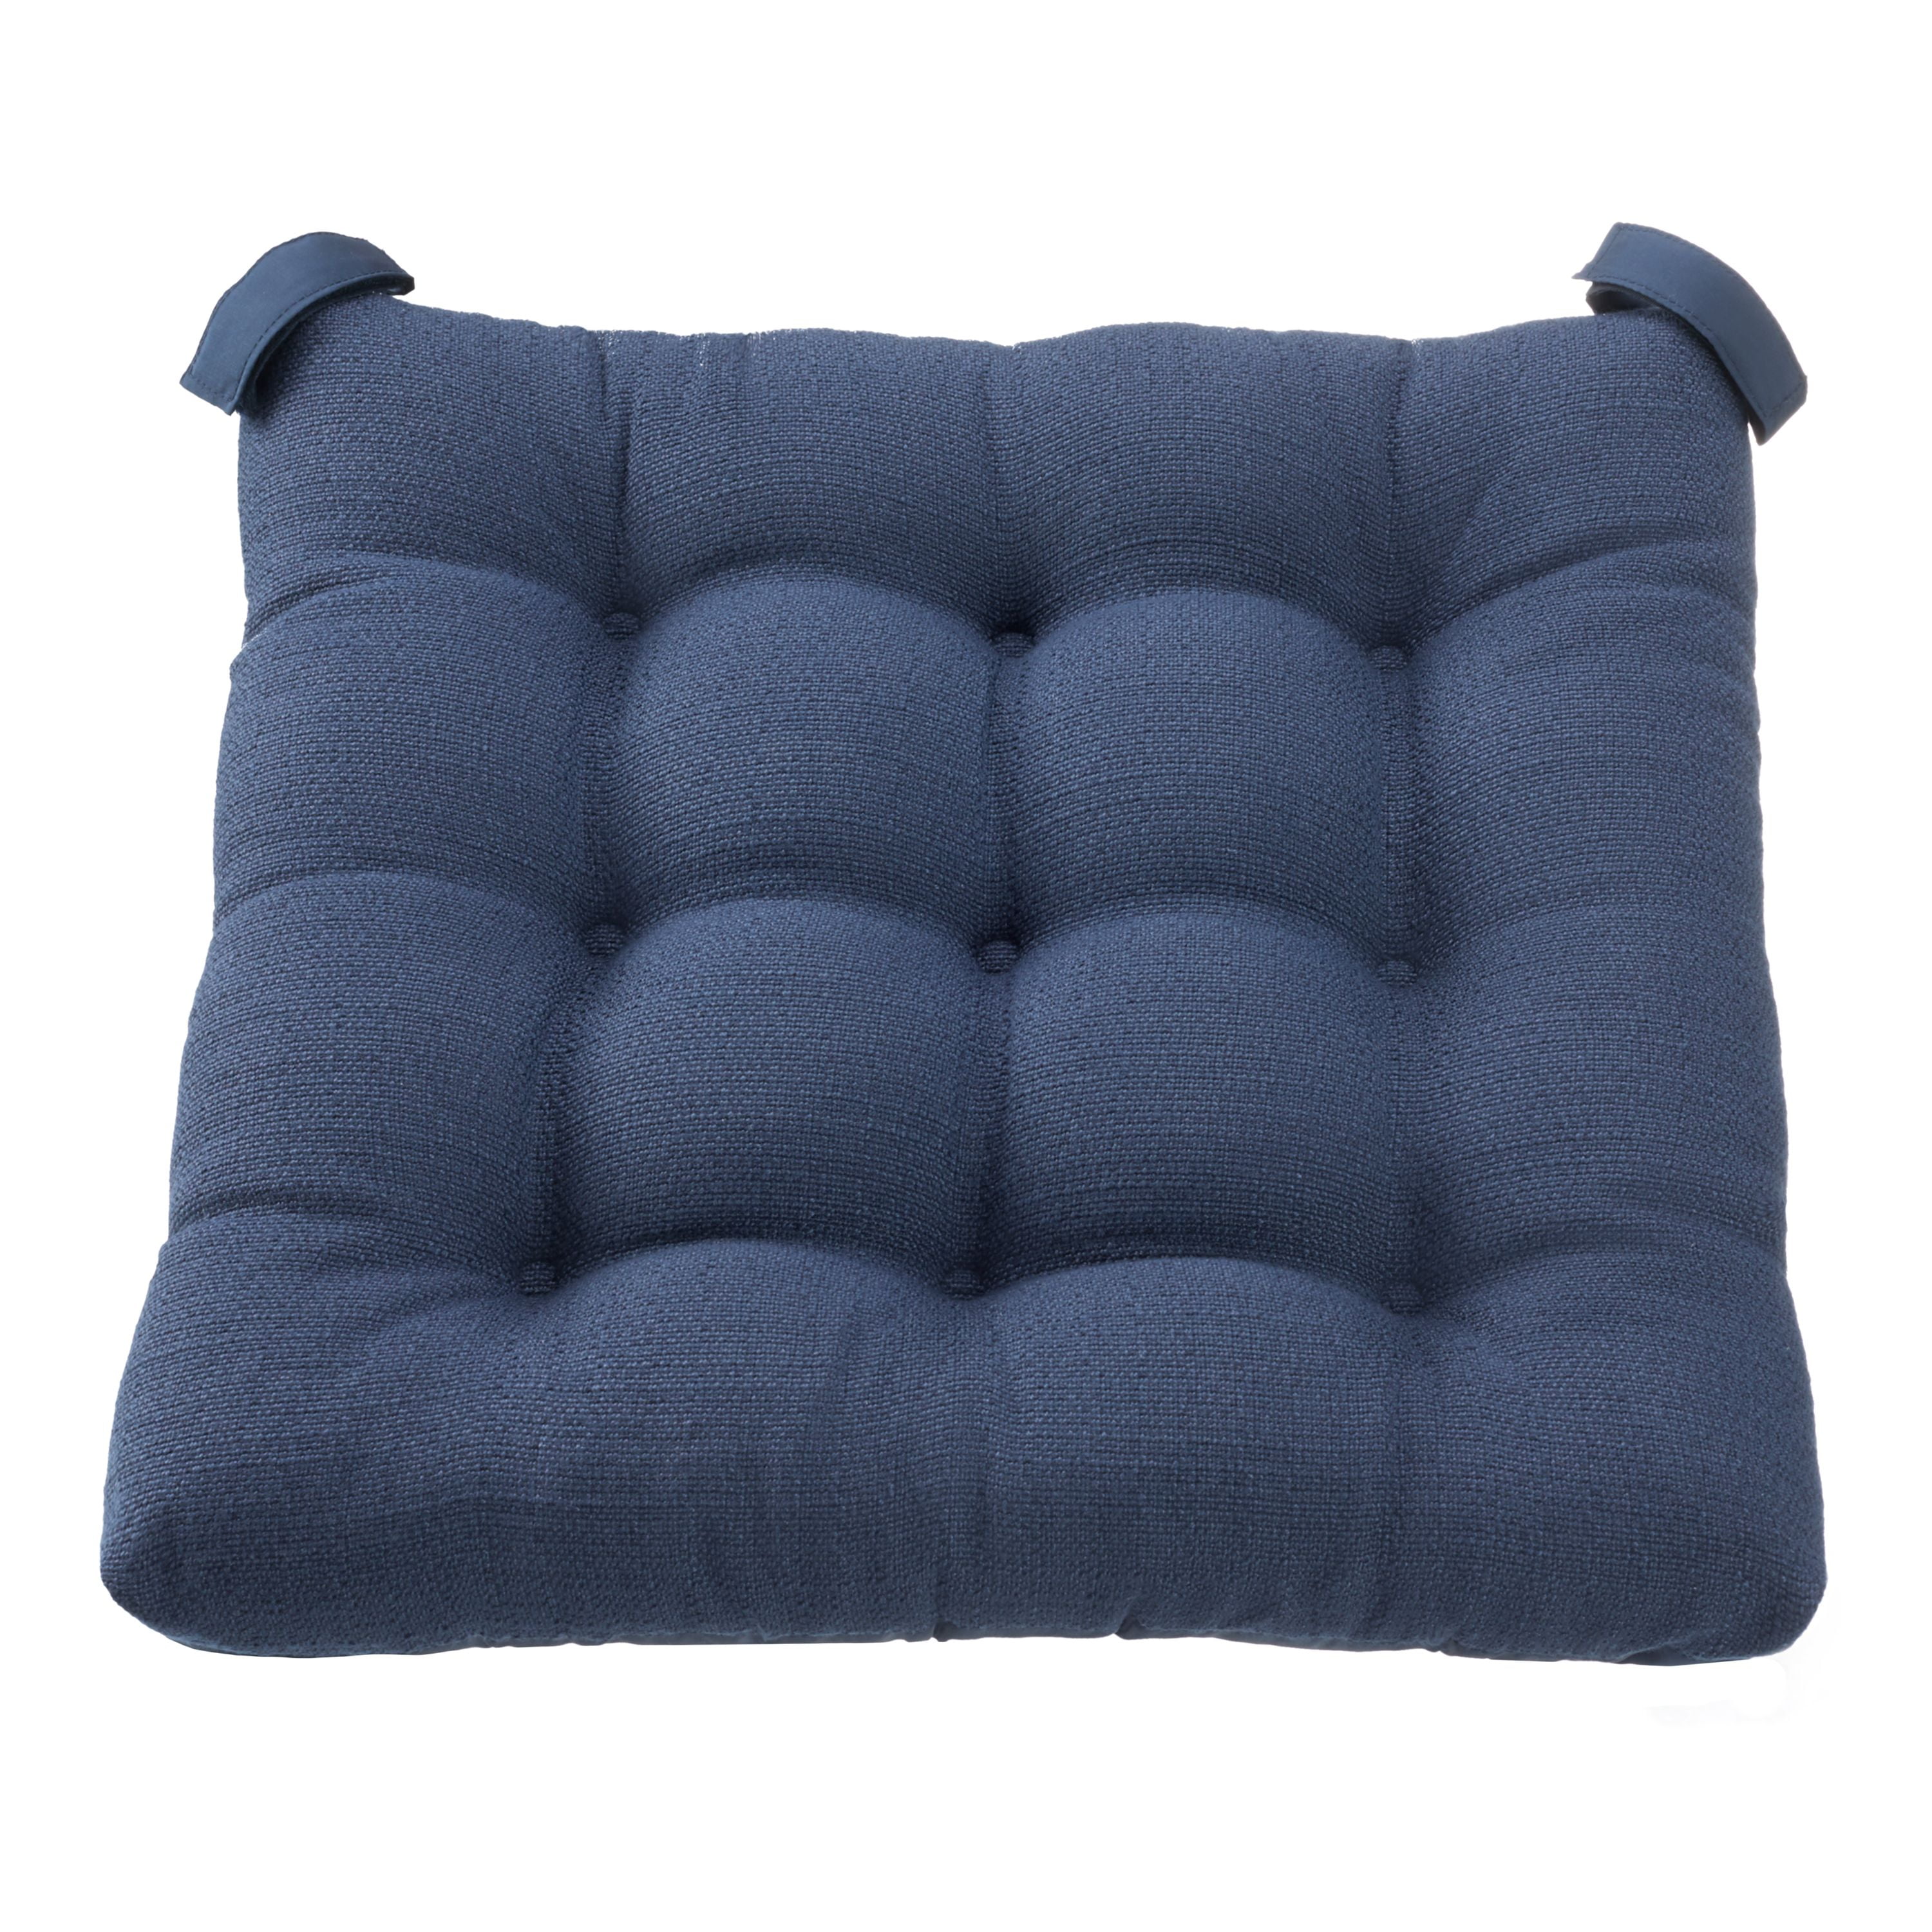 Mainstays Textured Chair Cushion, Navy, 1-Piece